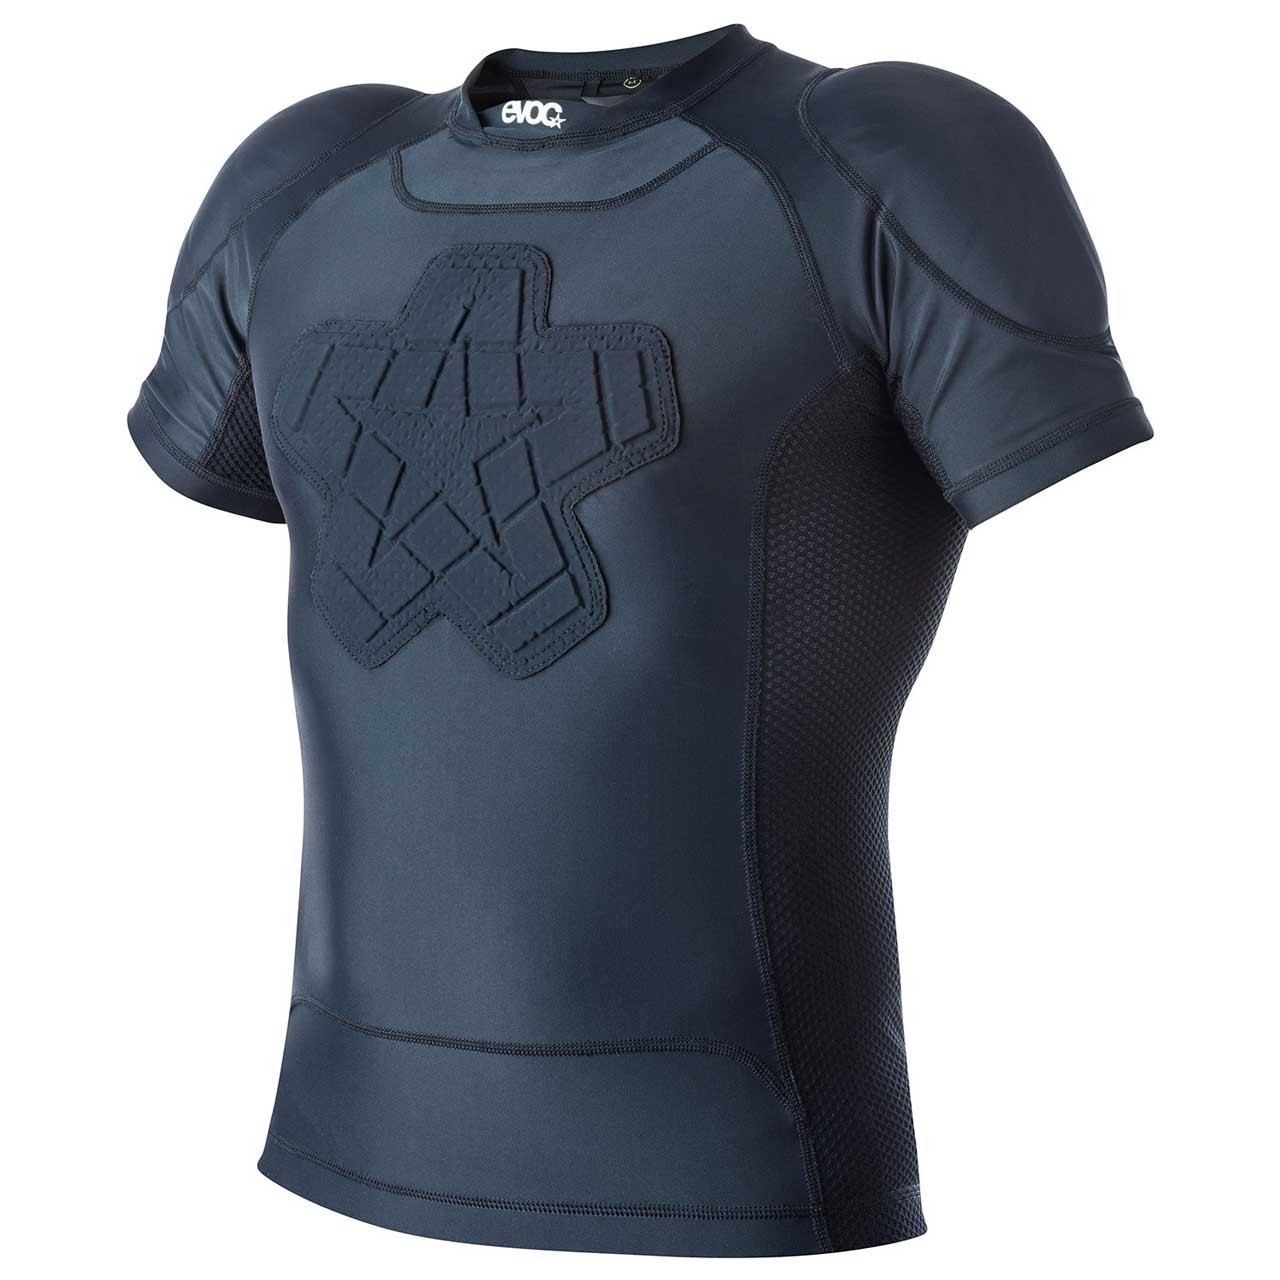 EVOC Enduro Protektoren-Shirt